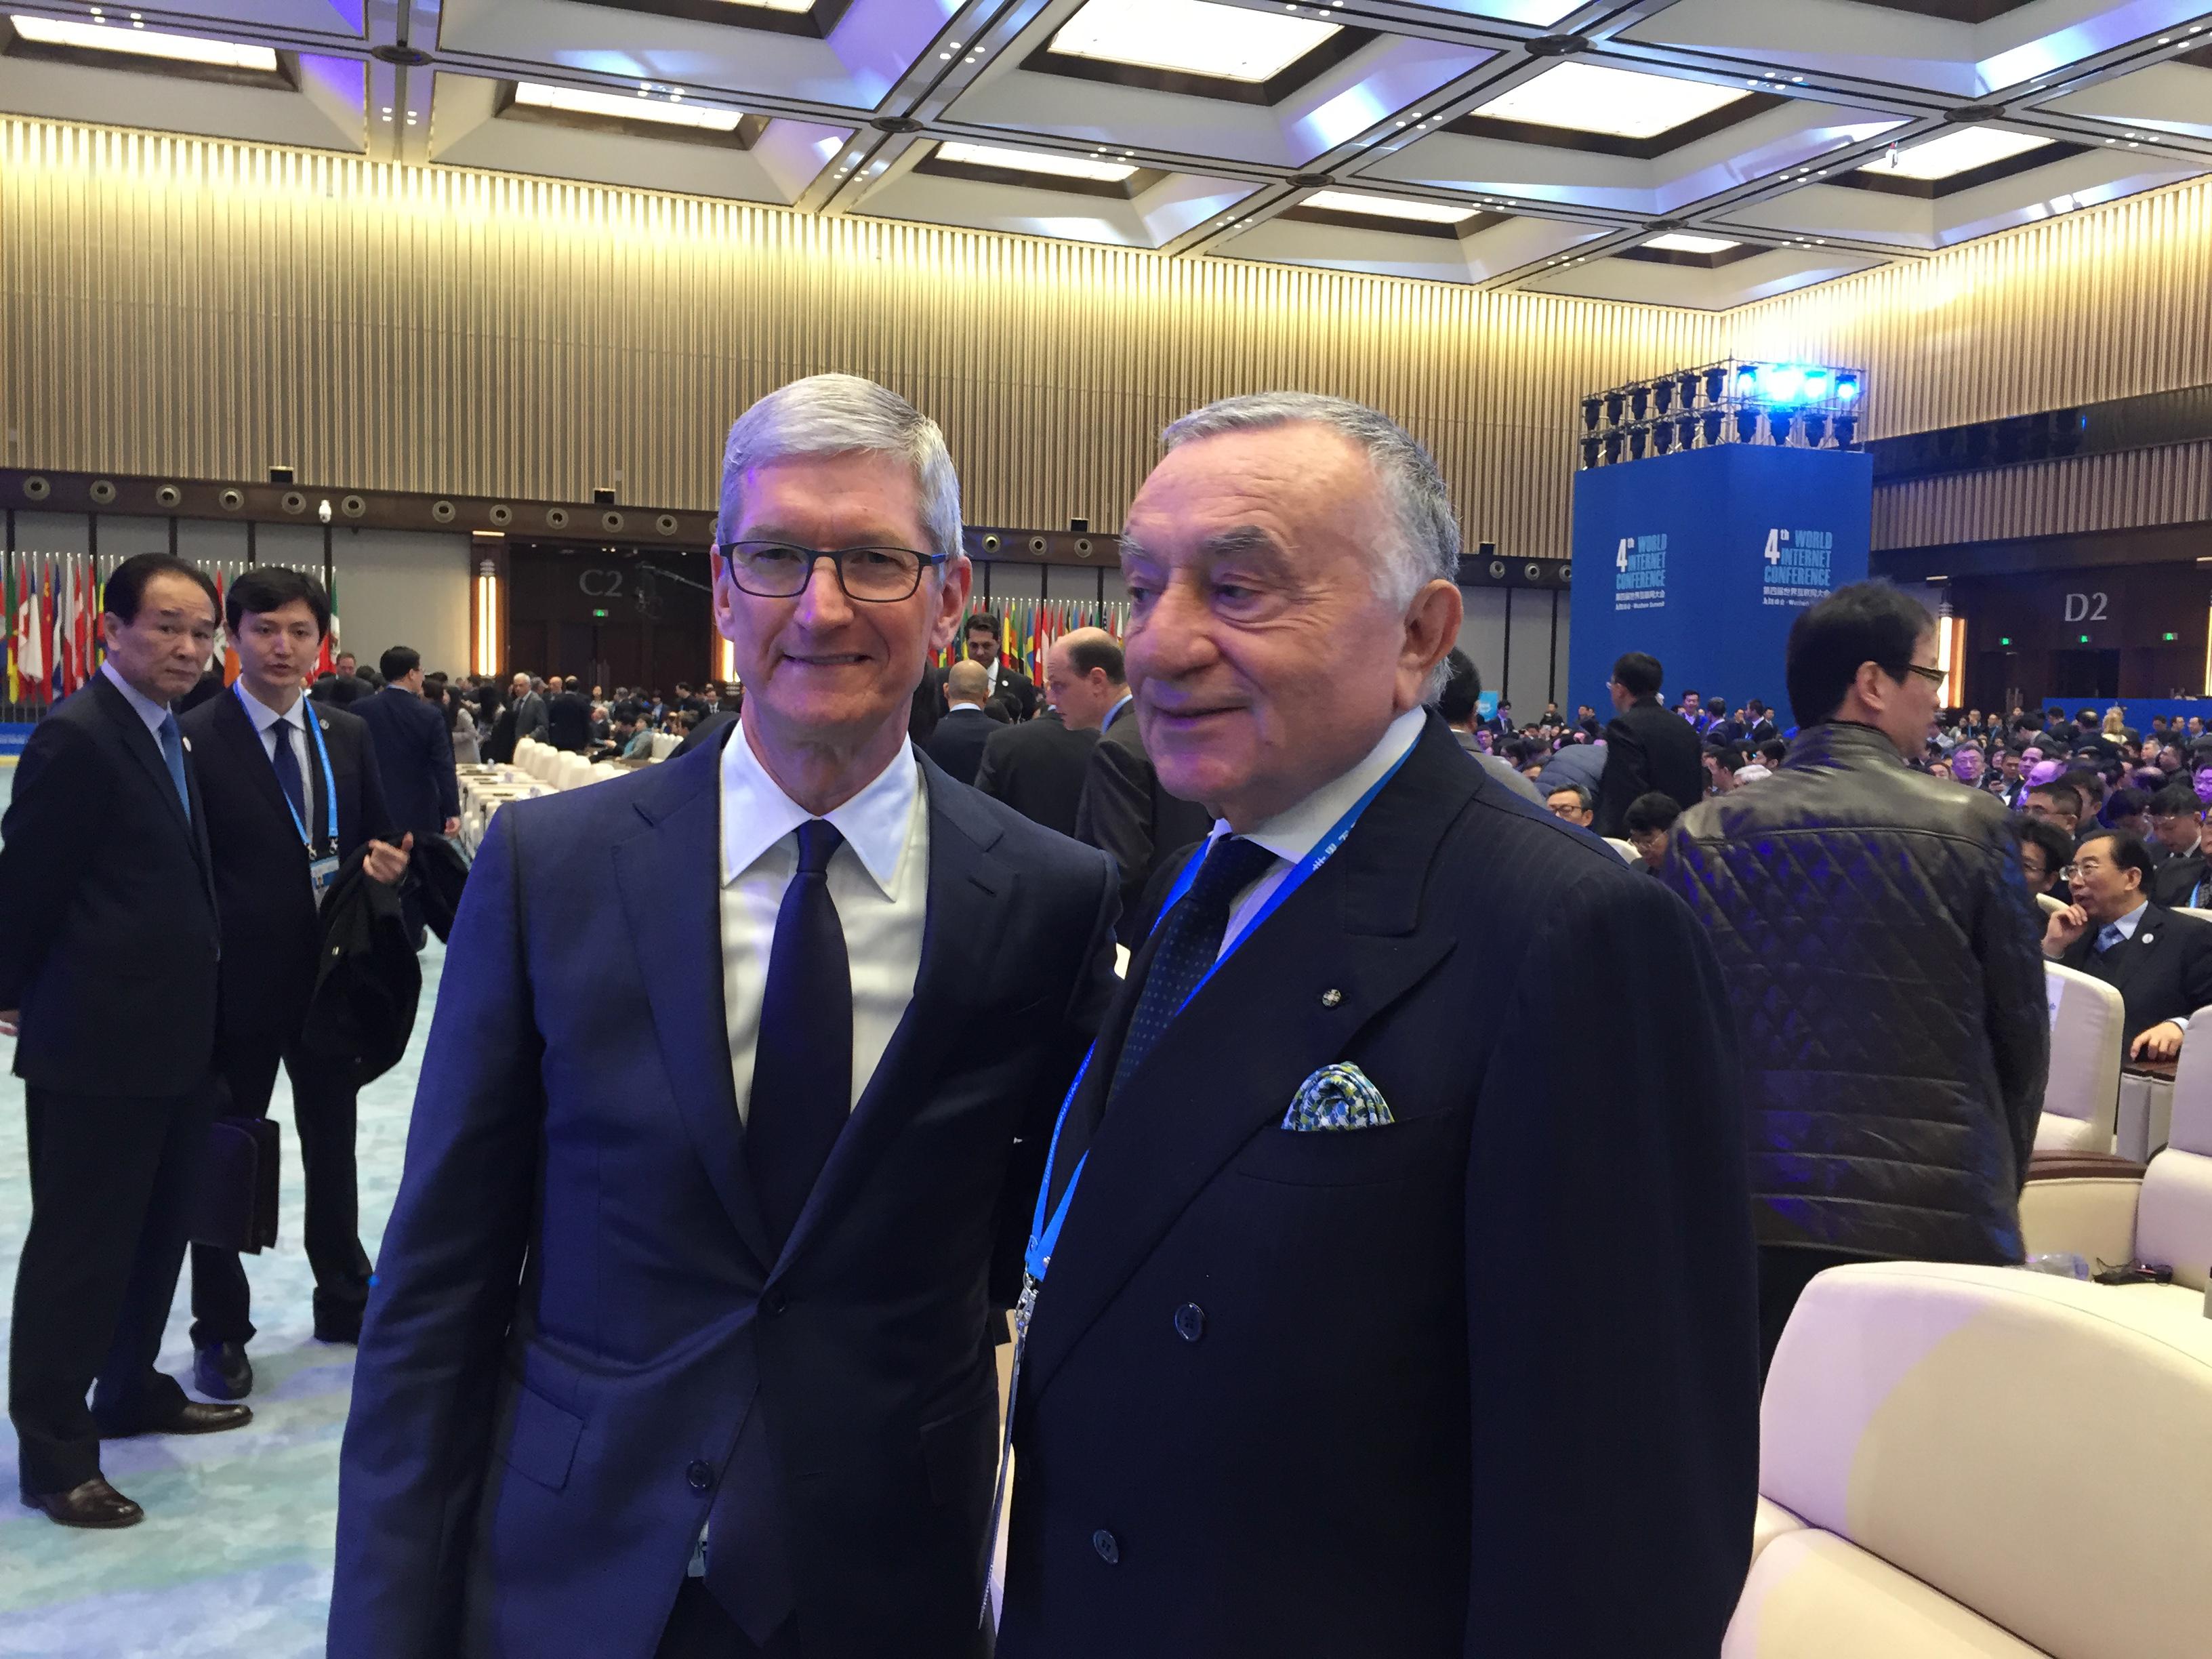 L'editore Giuseppe Marra e Tim Cook, CEO di Apple Inc. (foto AdnKronos)